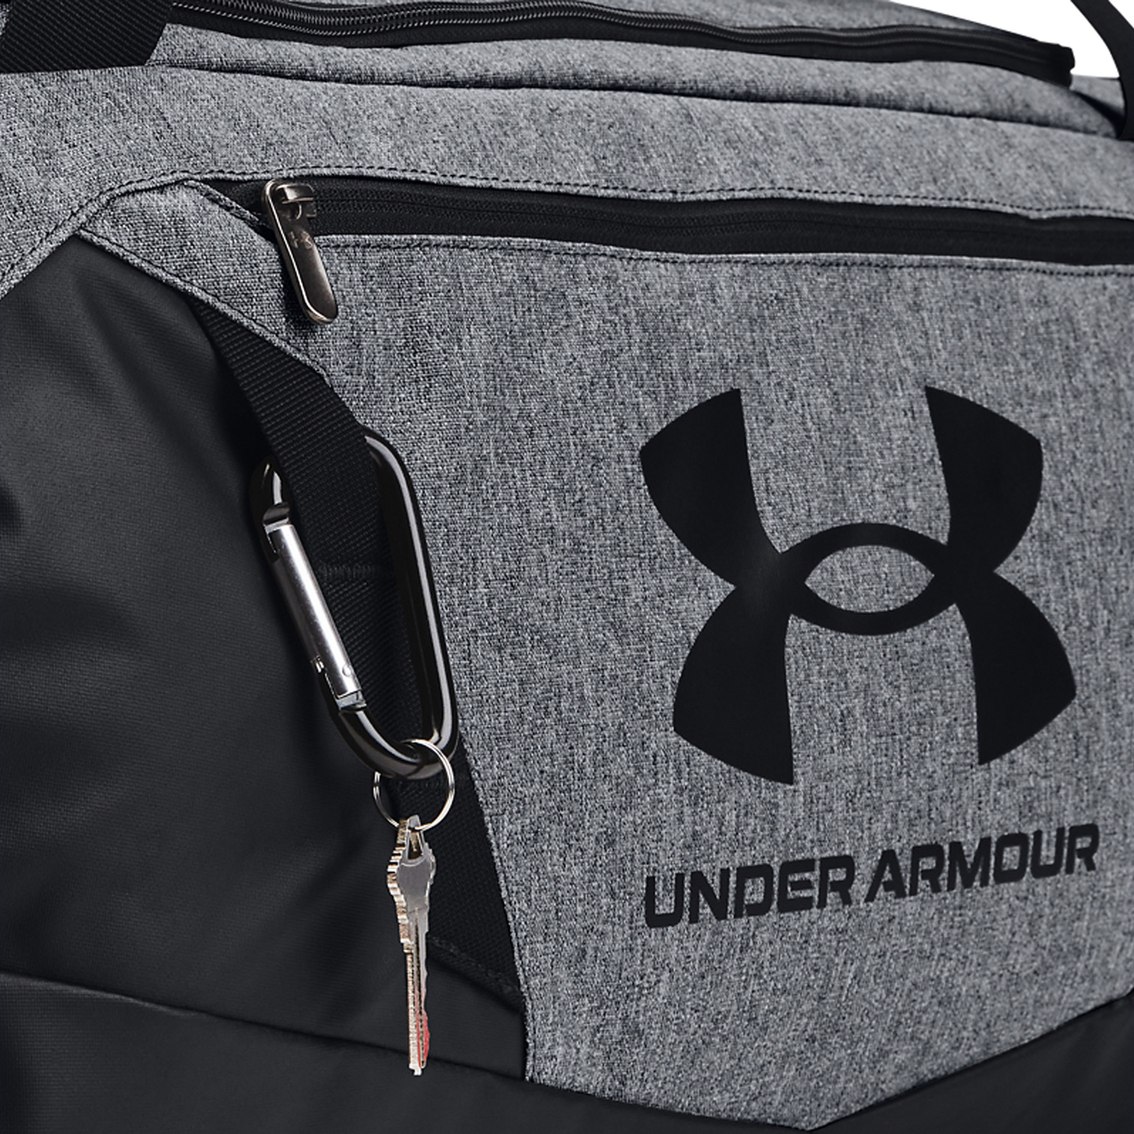 Under Armour Undeniable 5.0 Medium Duffle Bag - Image 4 of 8